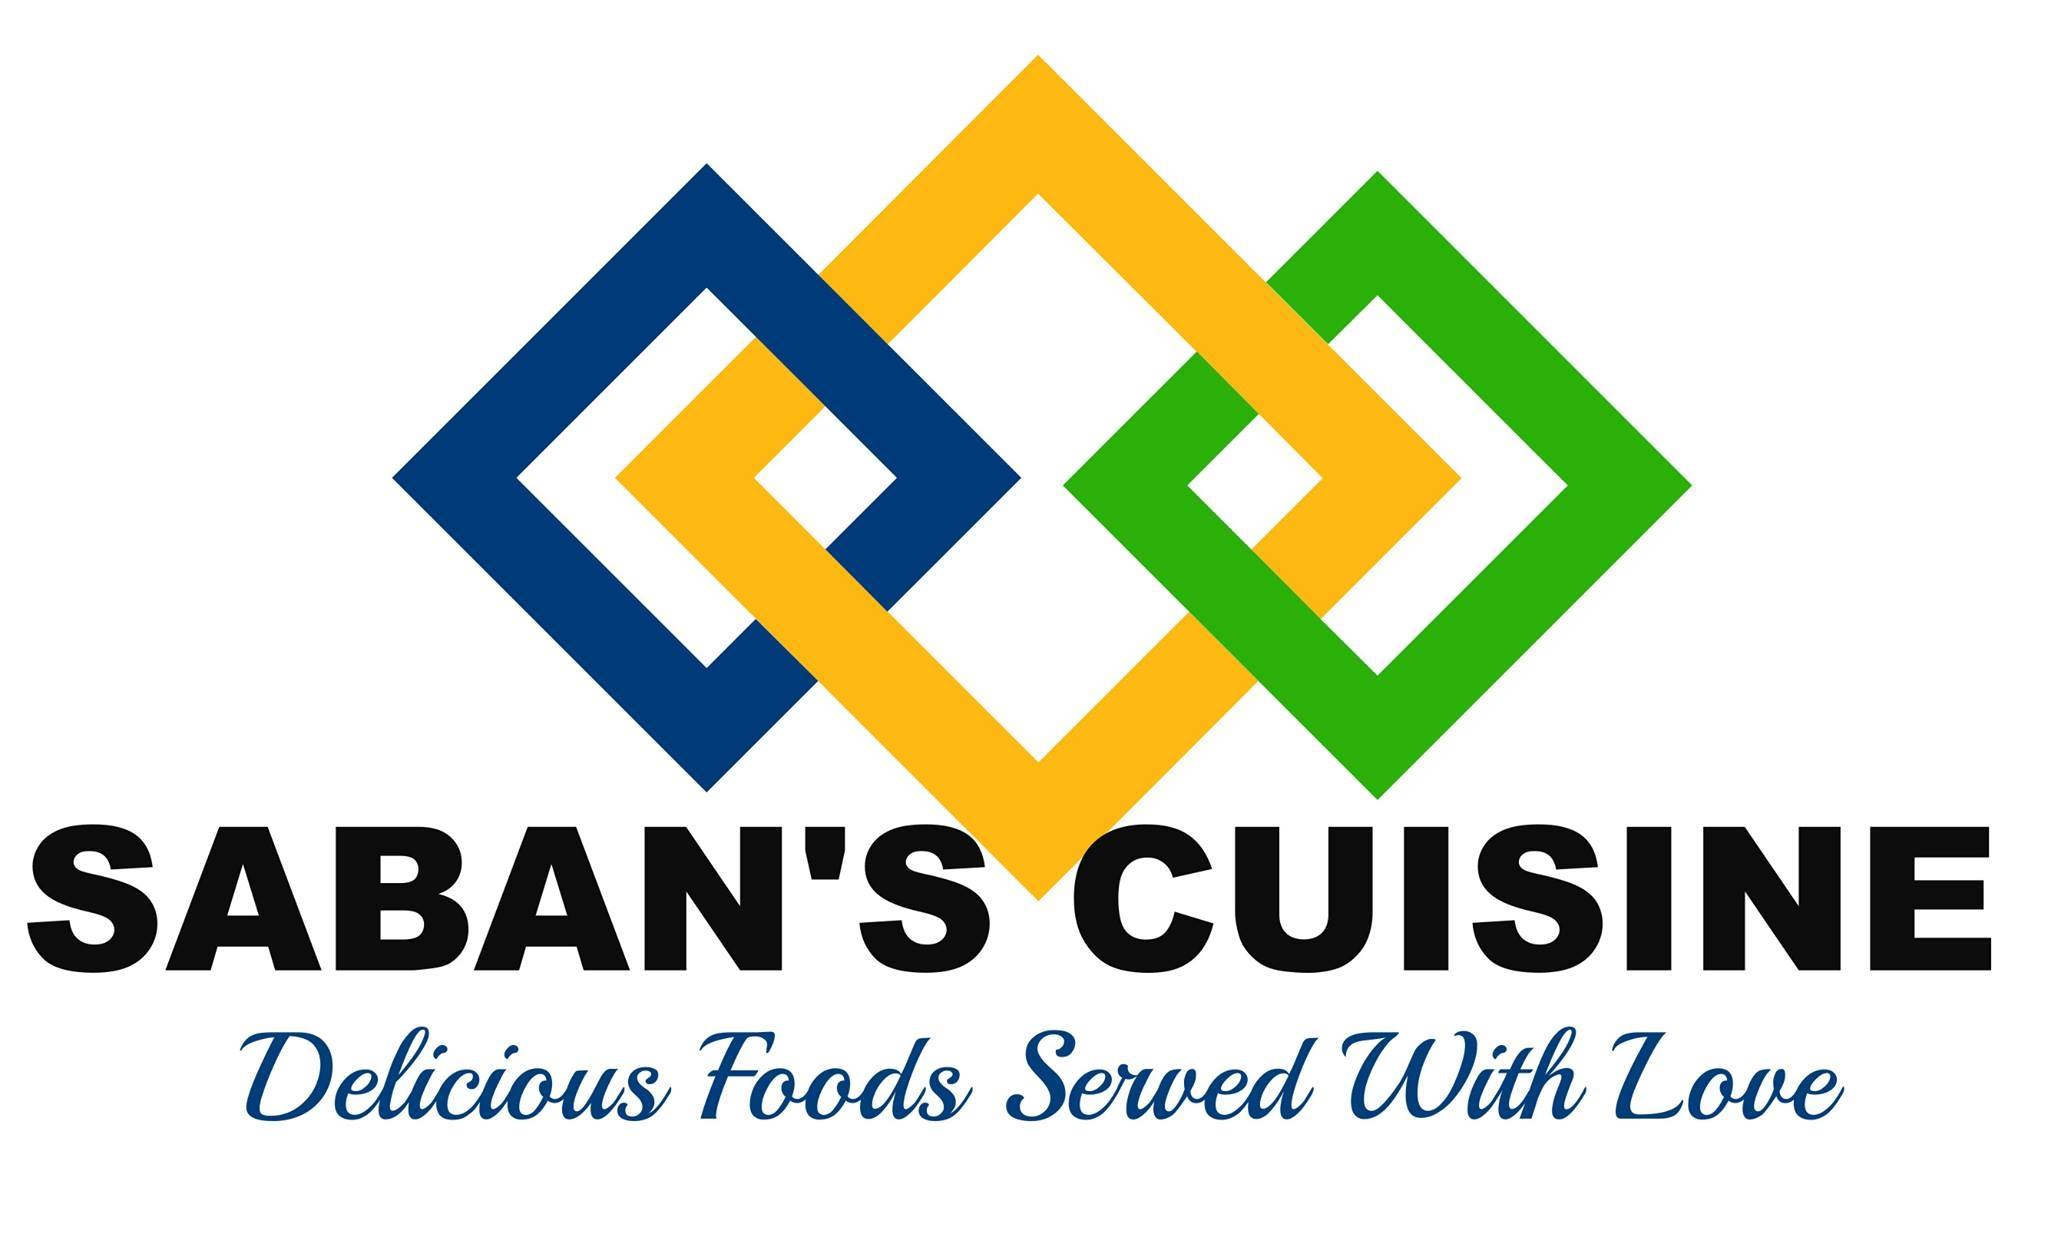 Saban cuisine Logo